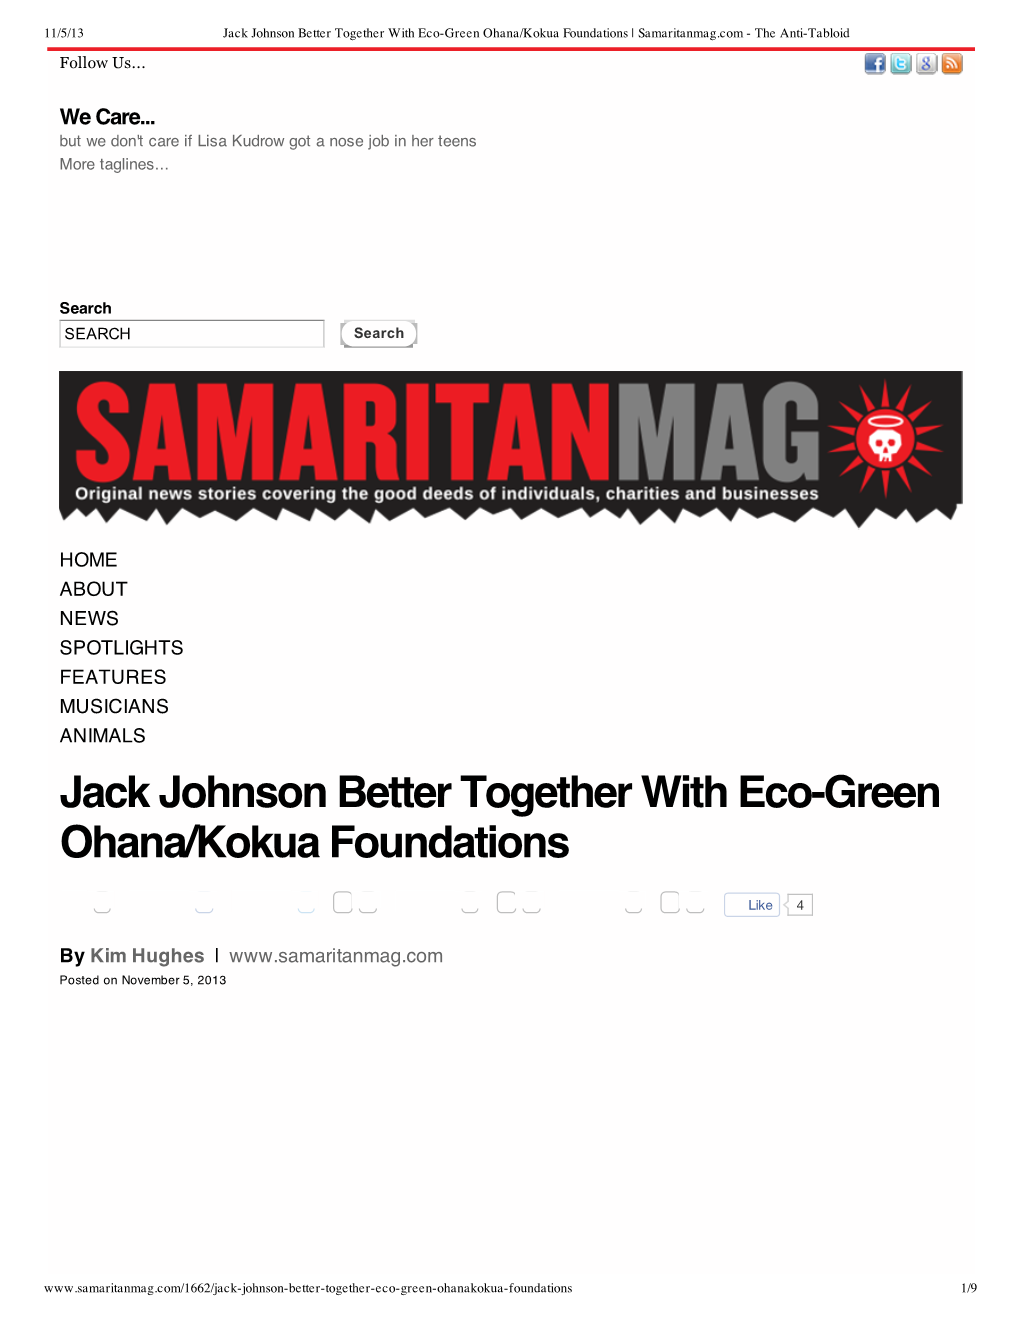 Jack Johnson Better Together with Eco-Green Ohana/Kokua Foundations | Samaritanmag.Com - the Anti-Tabloid Follow Us